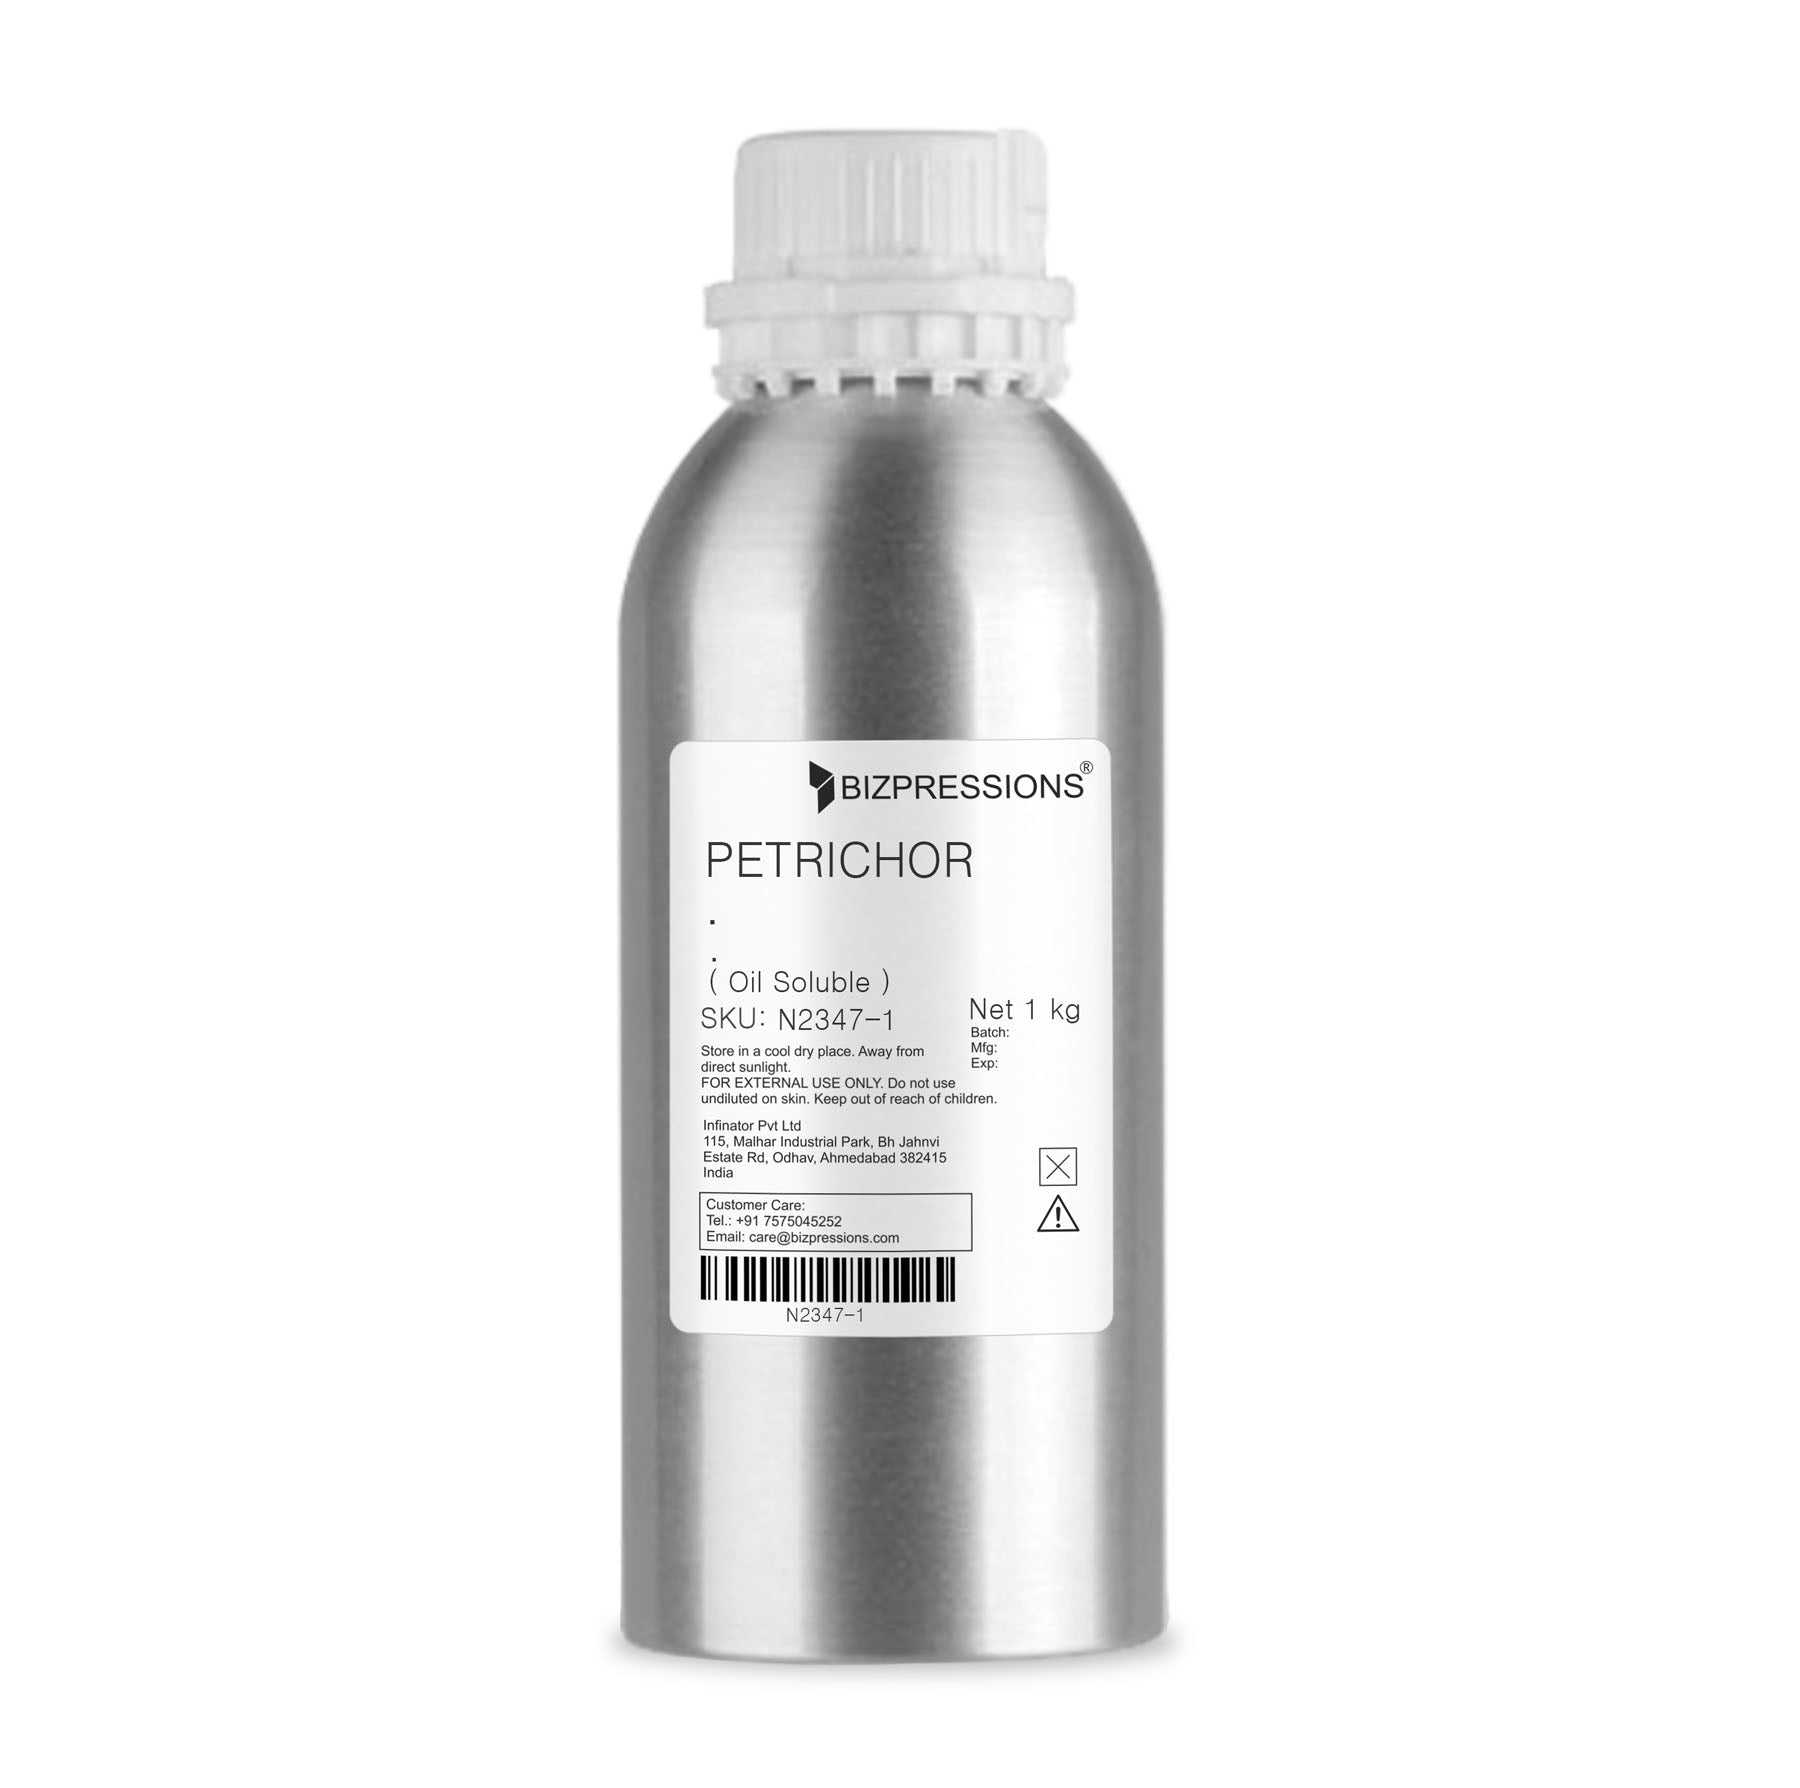 PETRICHOR - Fragrance ( Oil Soluble ) - 1 kg